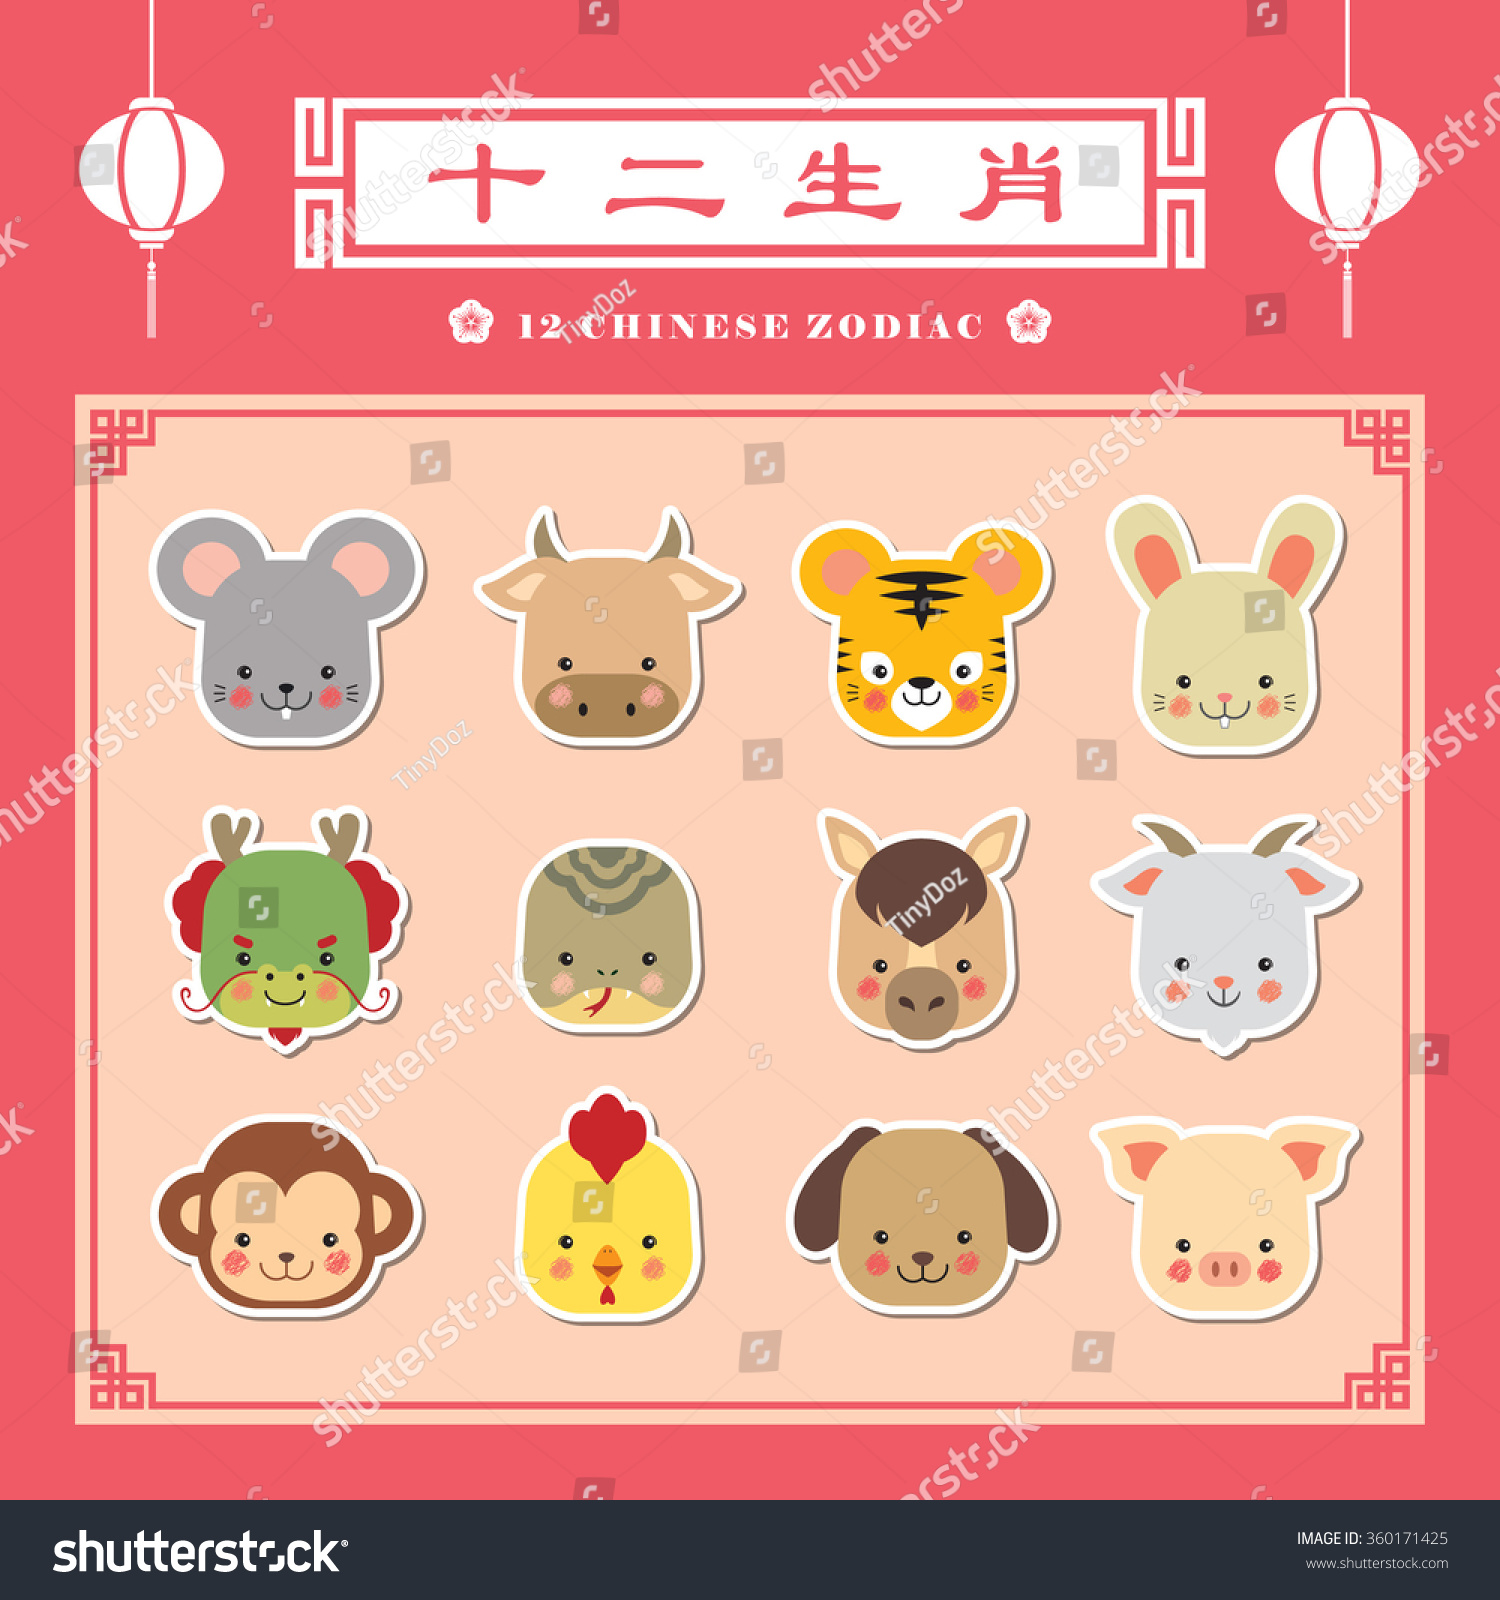 SVG of 12 chinese zodiac icon set. Cute cartoon chinese horoscope flat design. Animal head sticker collection. (translation: 12 chinese zodiac) svg